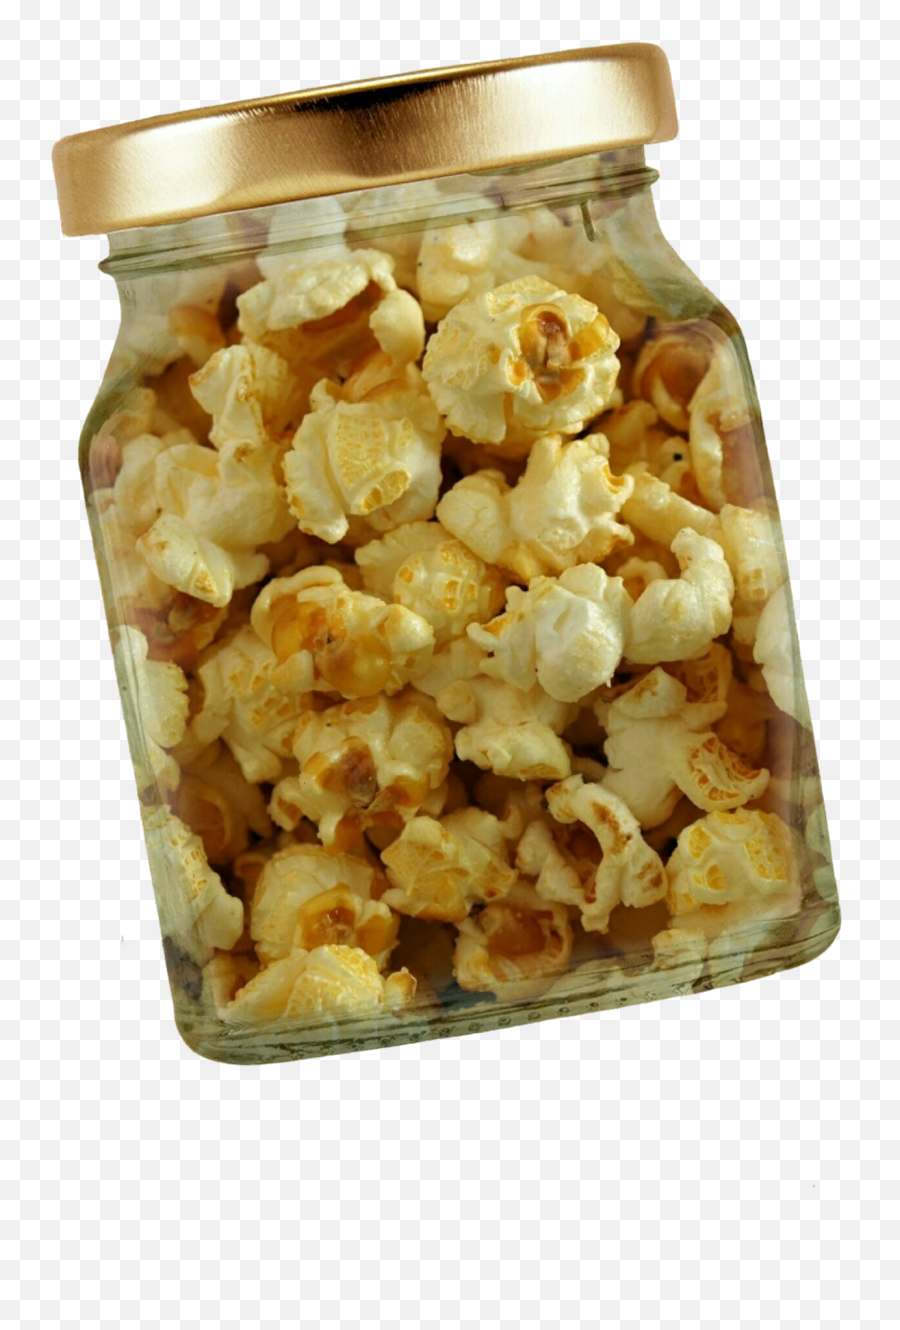 Download Hd Popcorn In Jar Png Image - Popcorn Transparent Popcorn,Popcorn Transparent